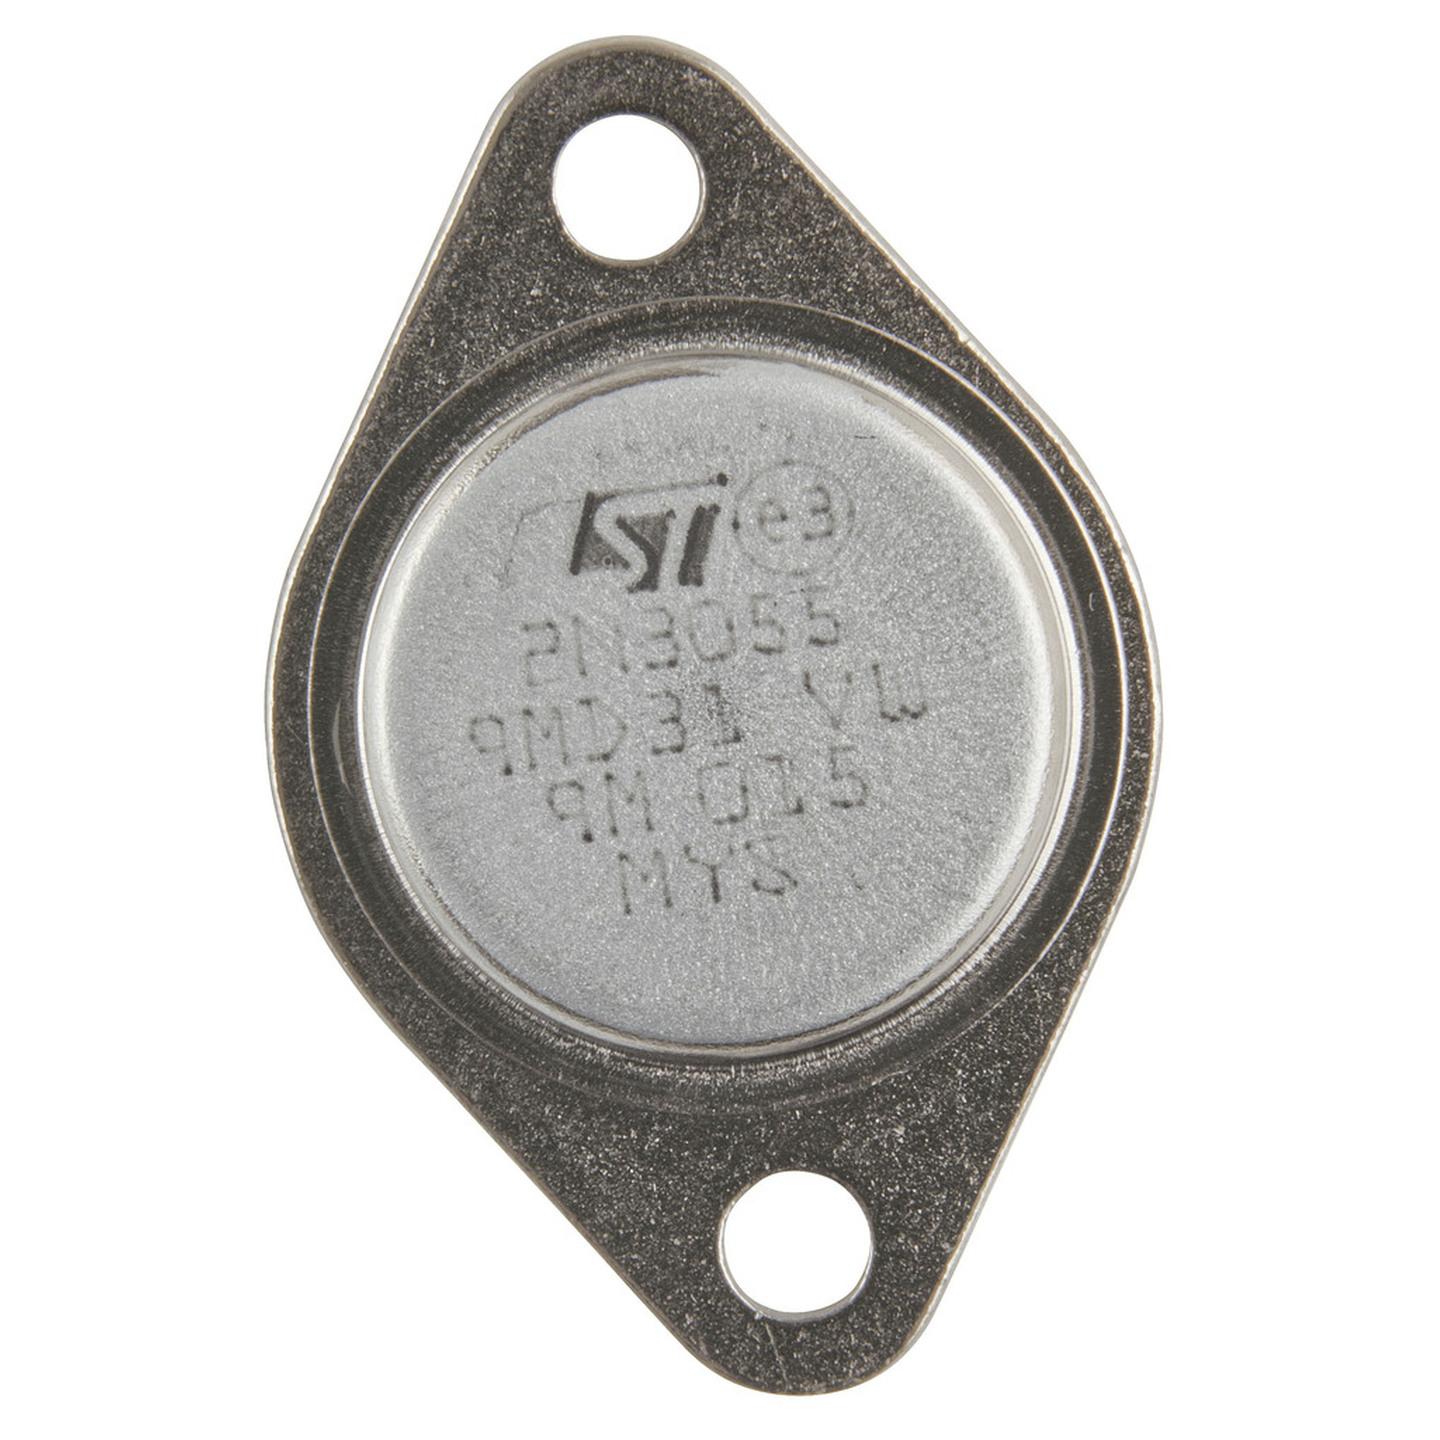 2N3055 NPN Transistor